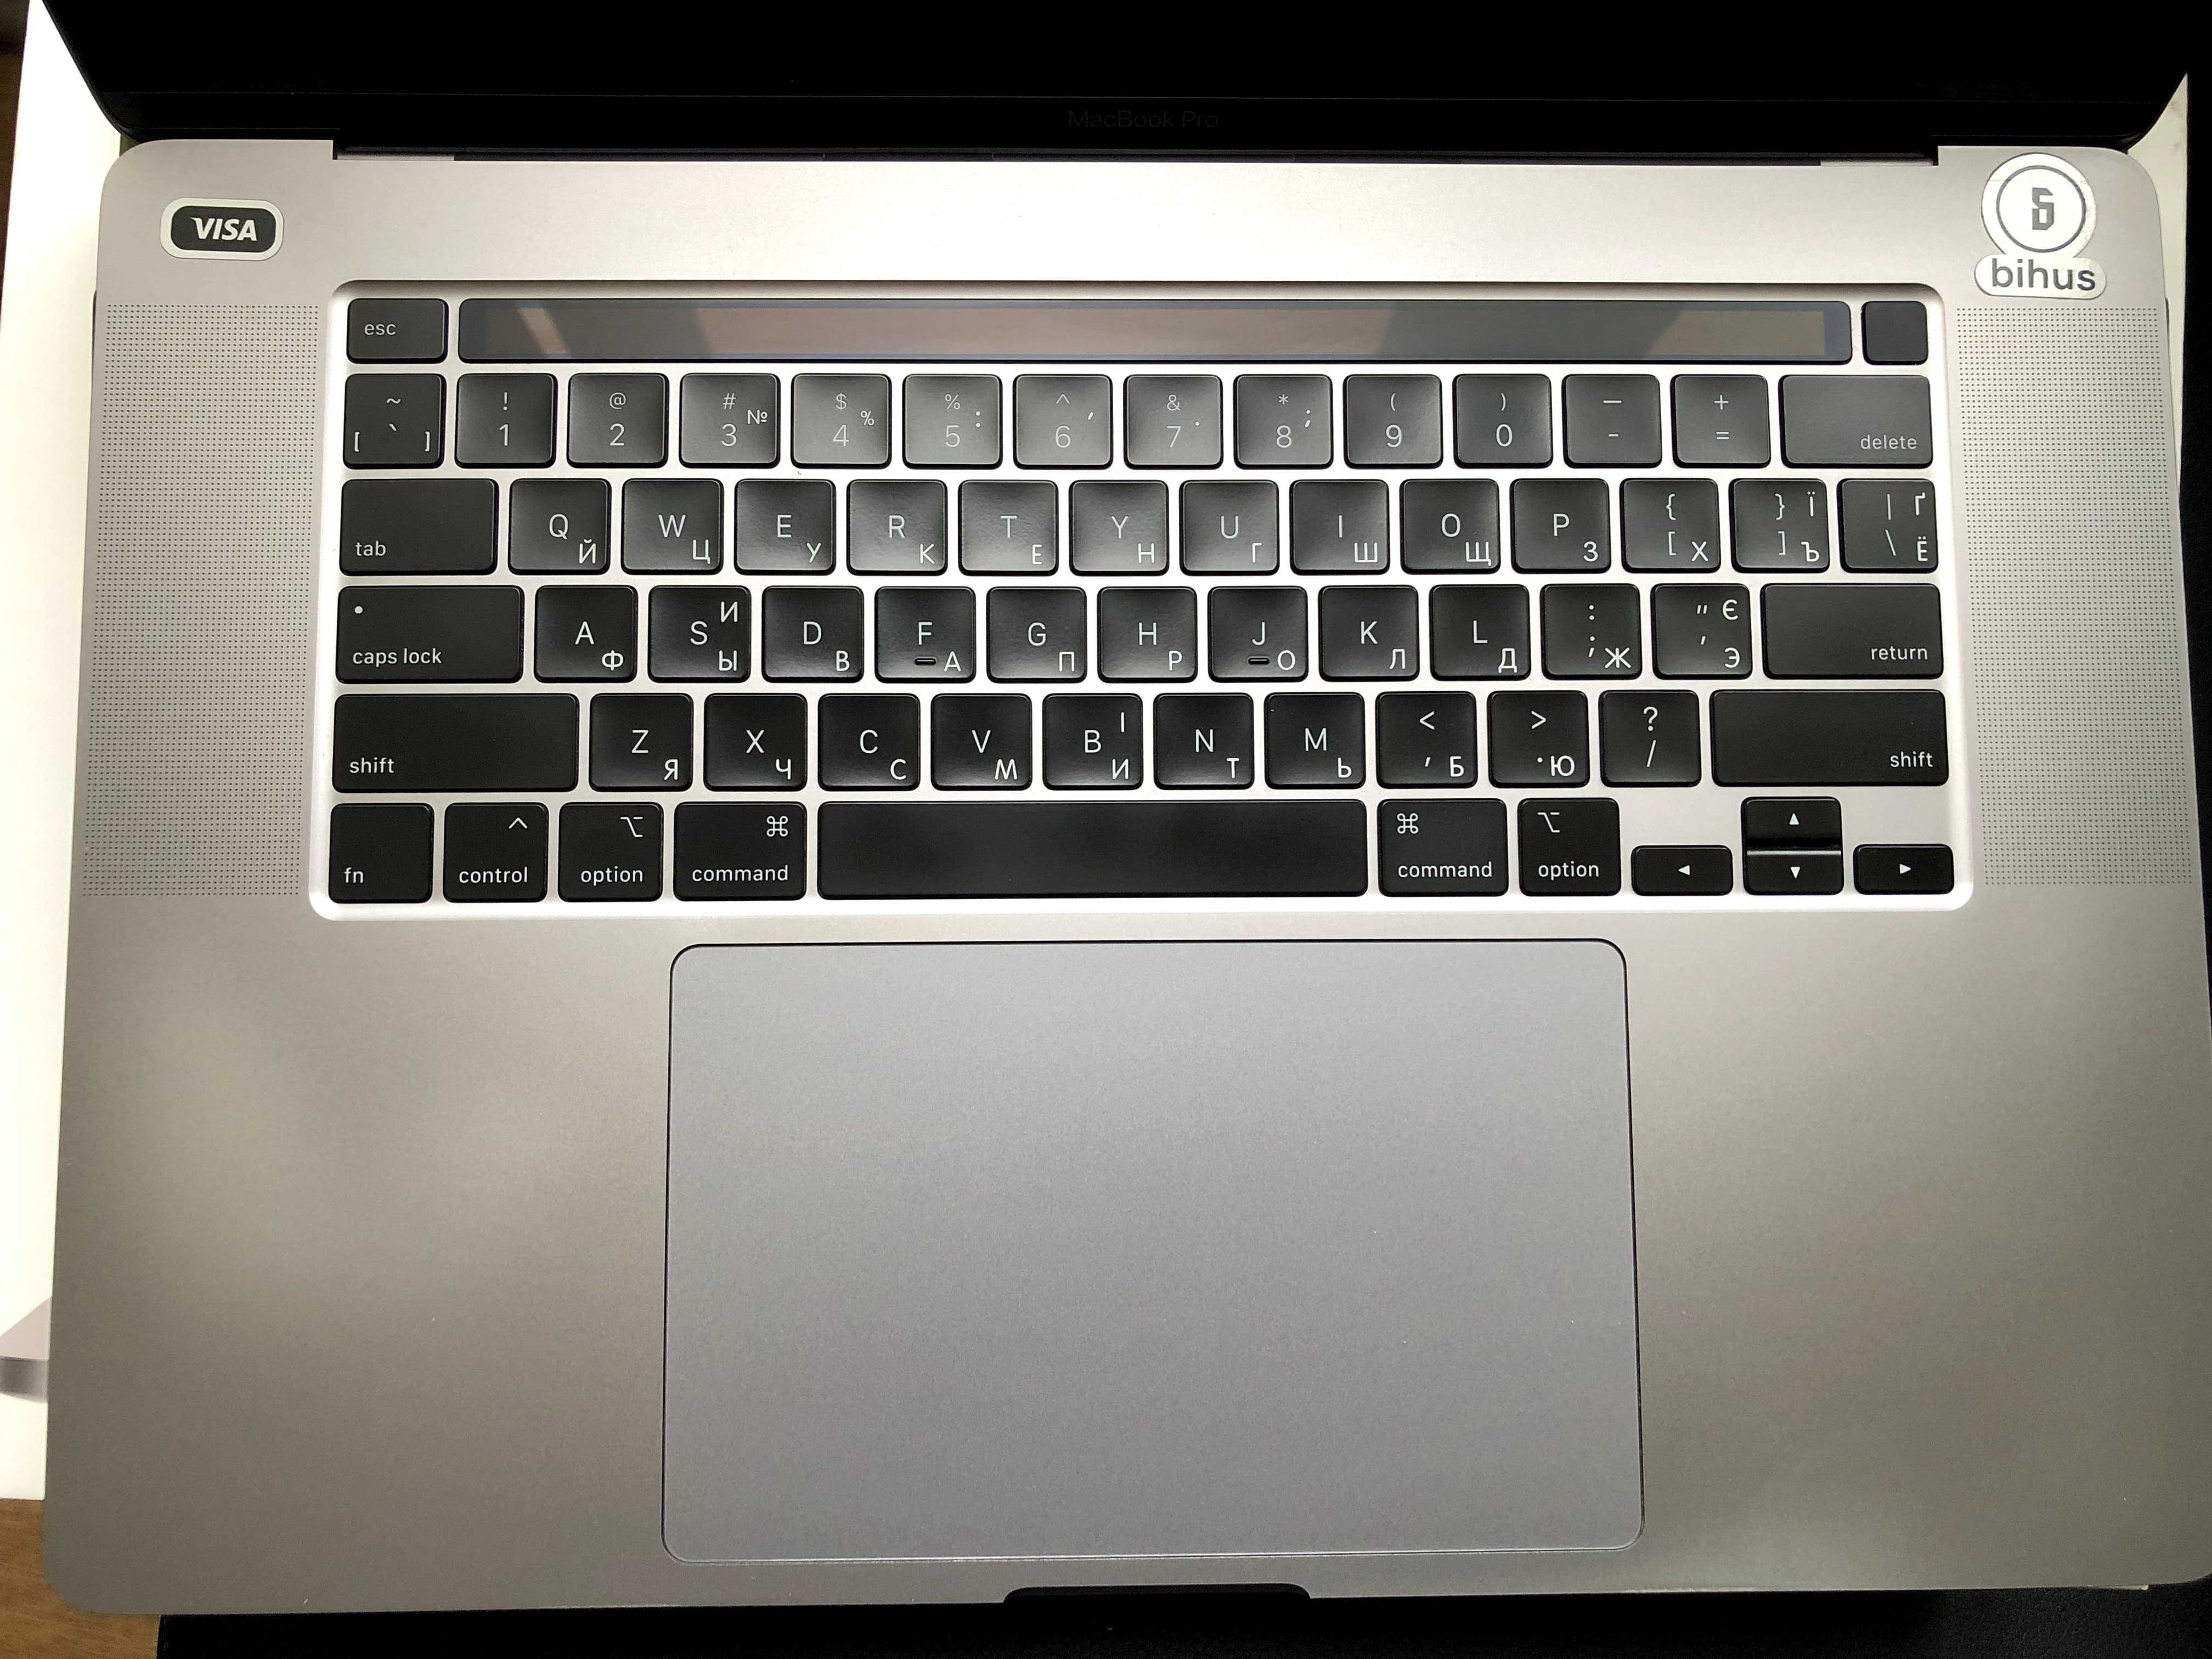 MacBook Pro 16 2019 MVVJ2